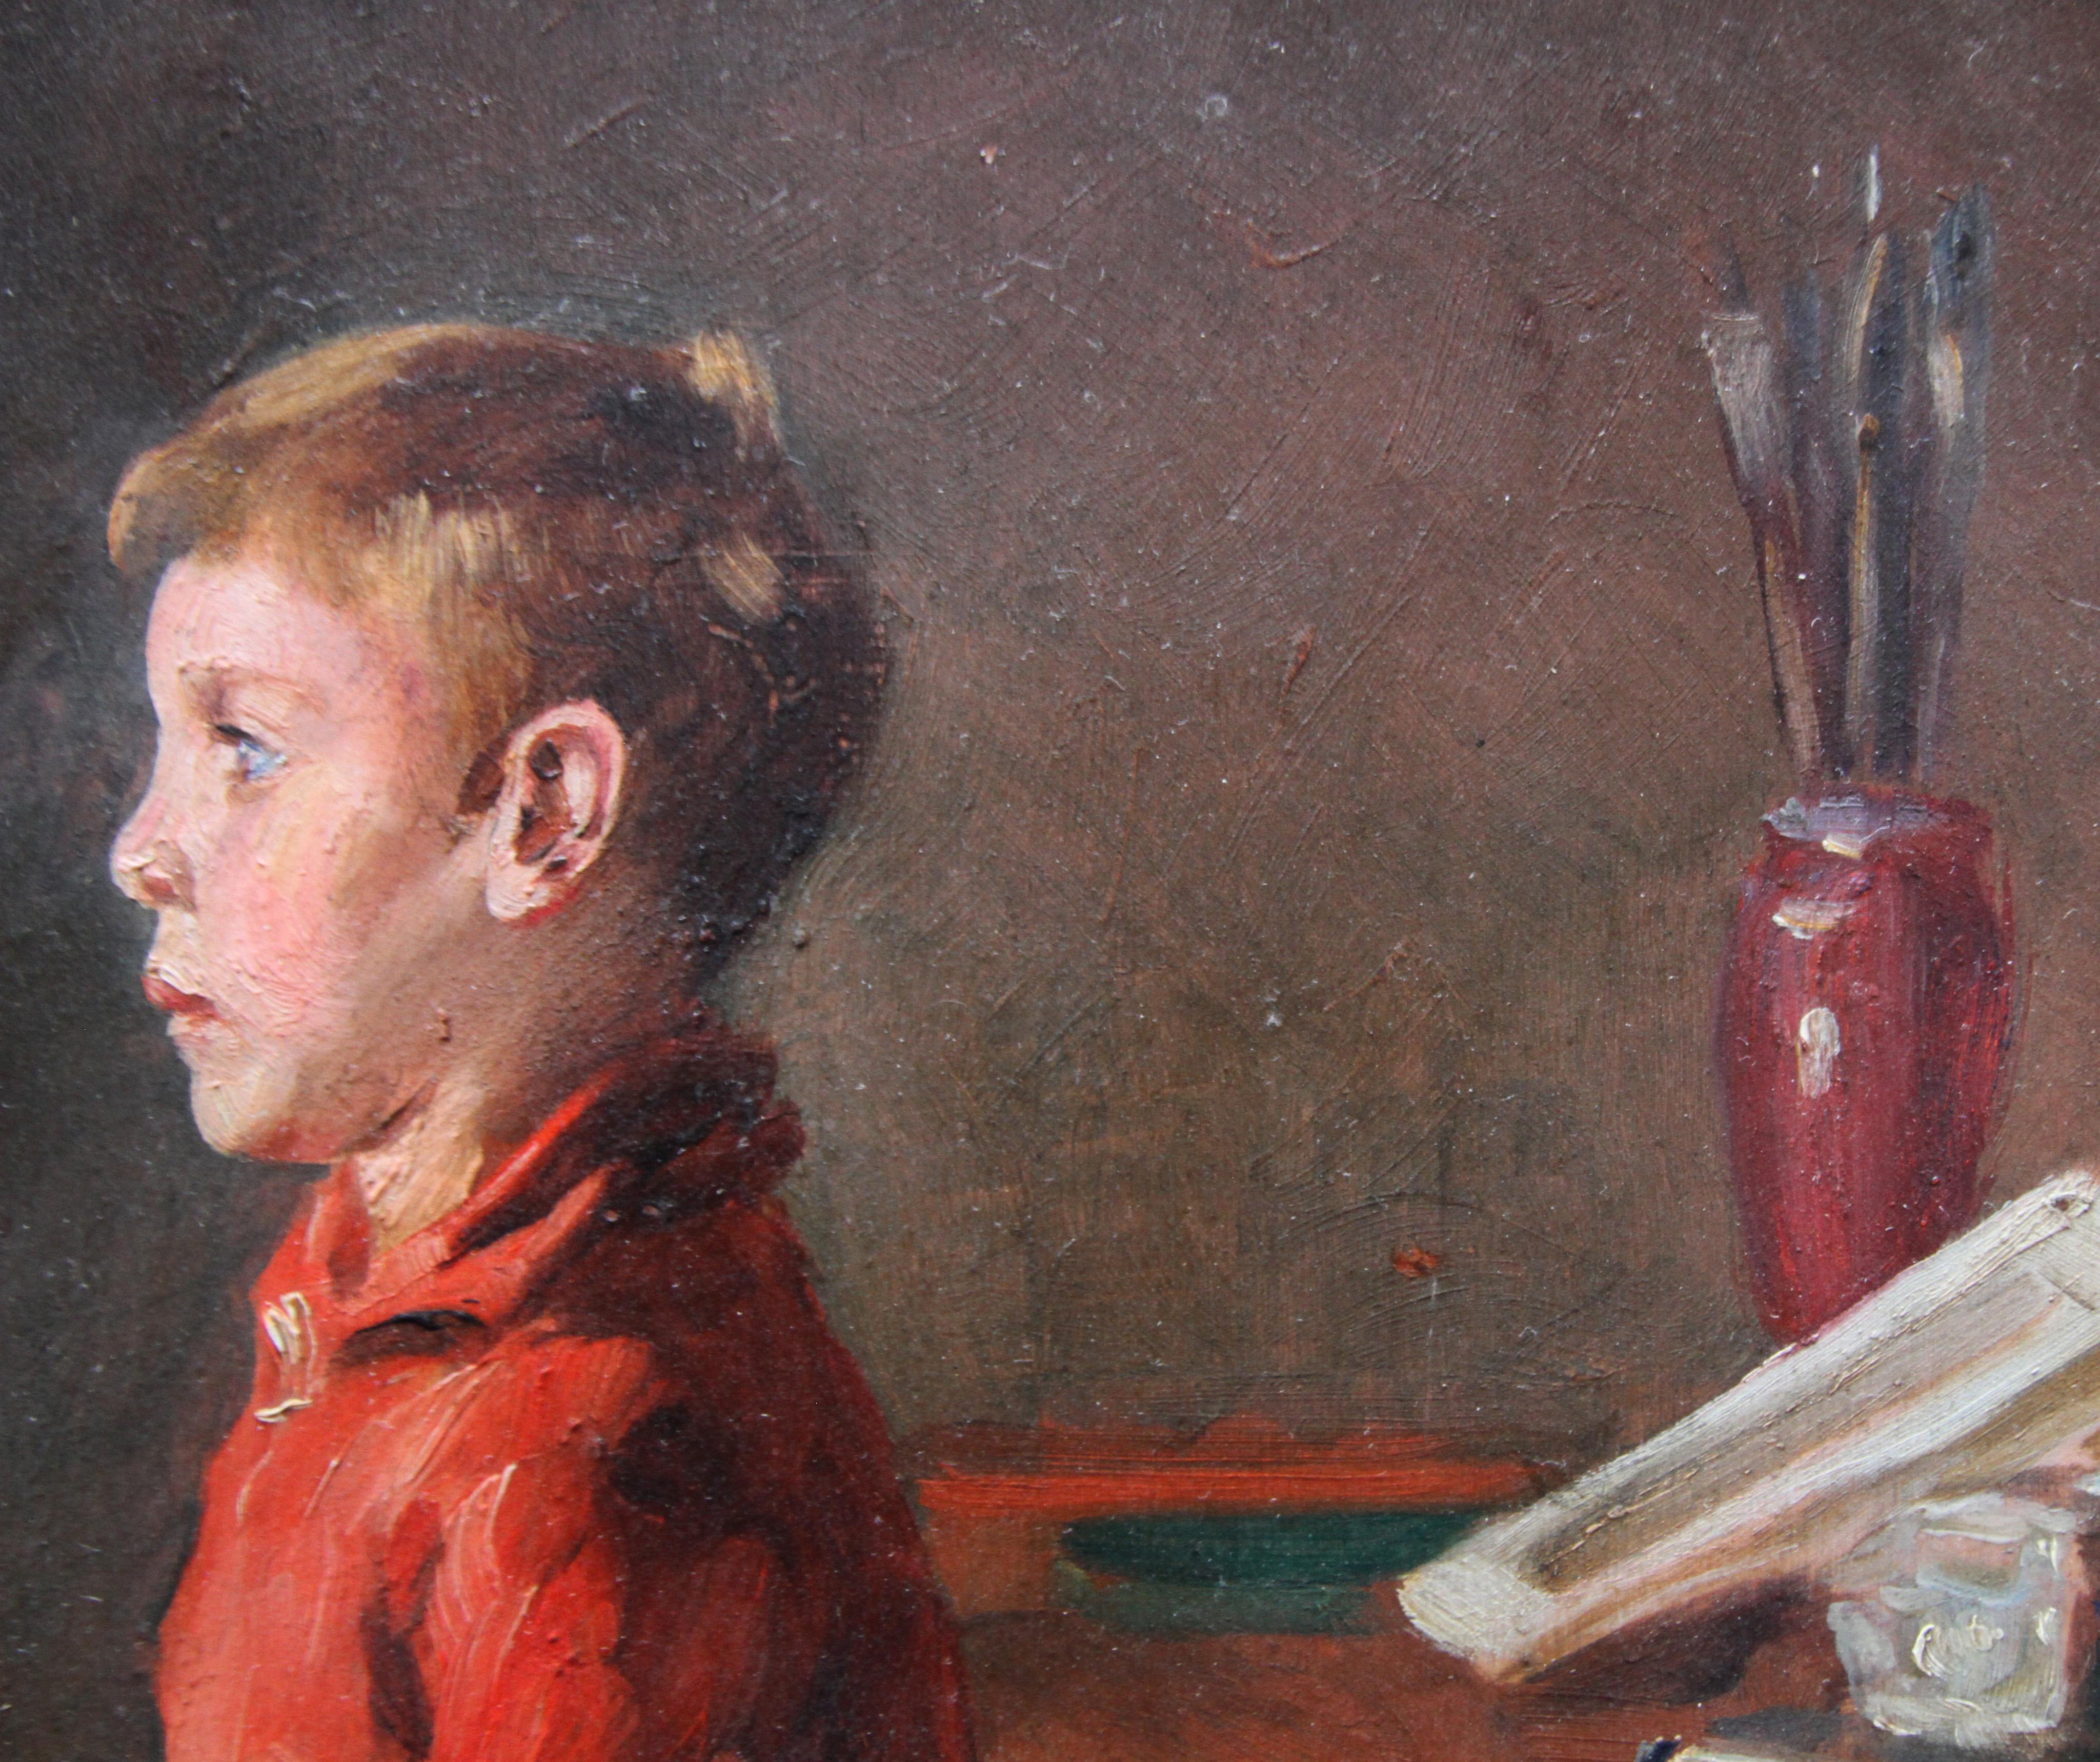 Schoolboy with Cricket Bat - British Slade School art 30's portrait oil painting 1